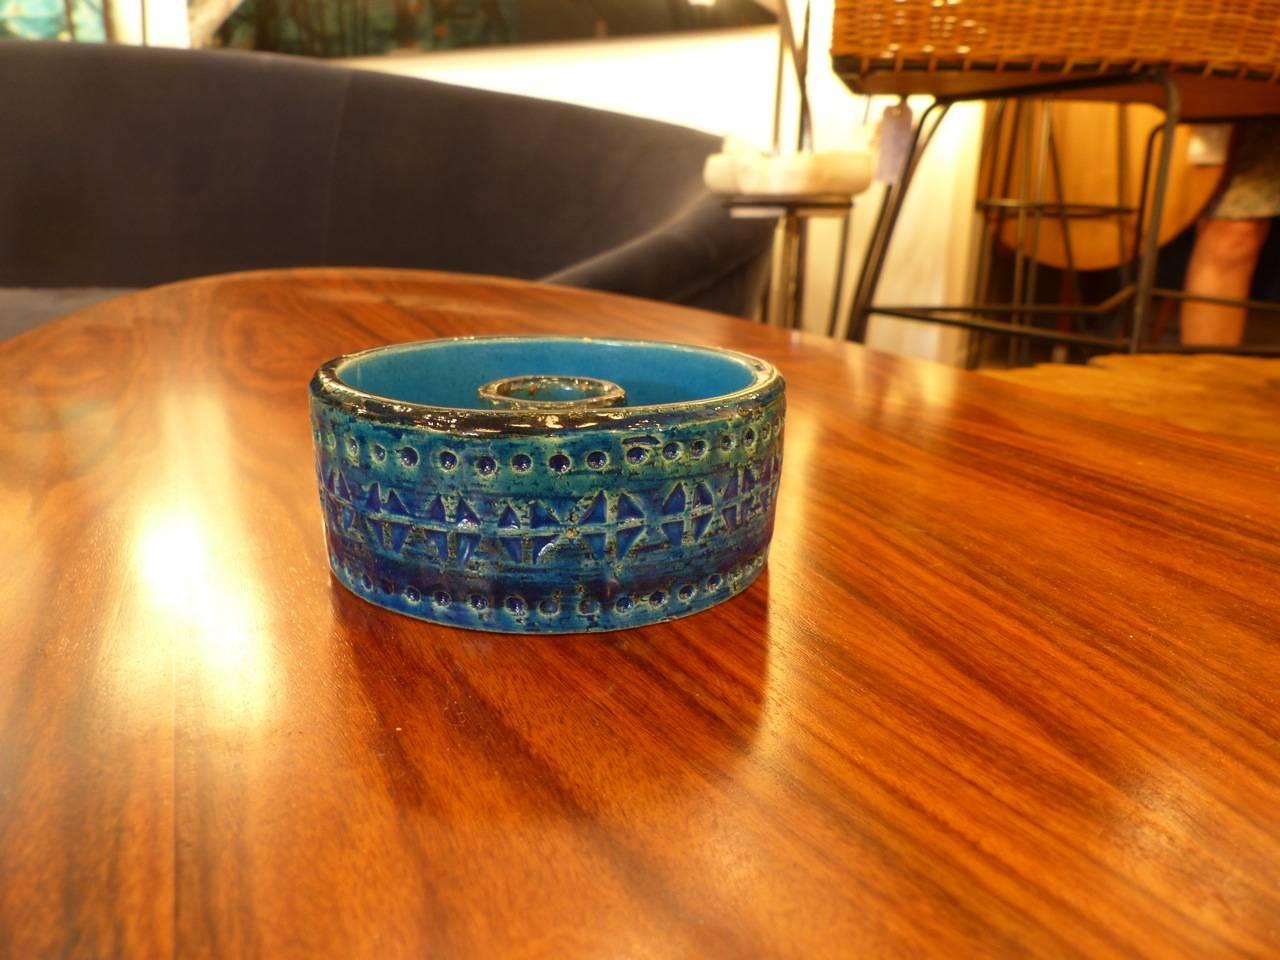 Aldo Londi ceramic for Bitossi (Rimini blue), in excellent condition.